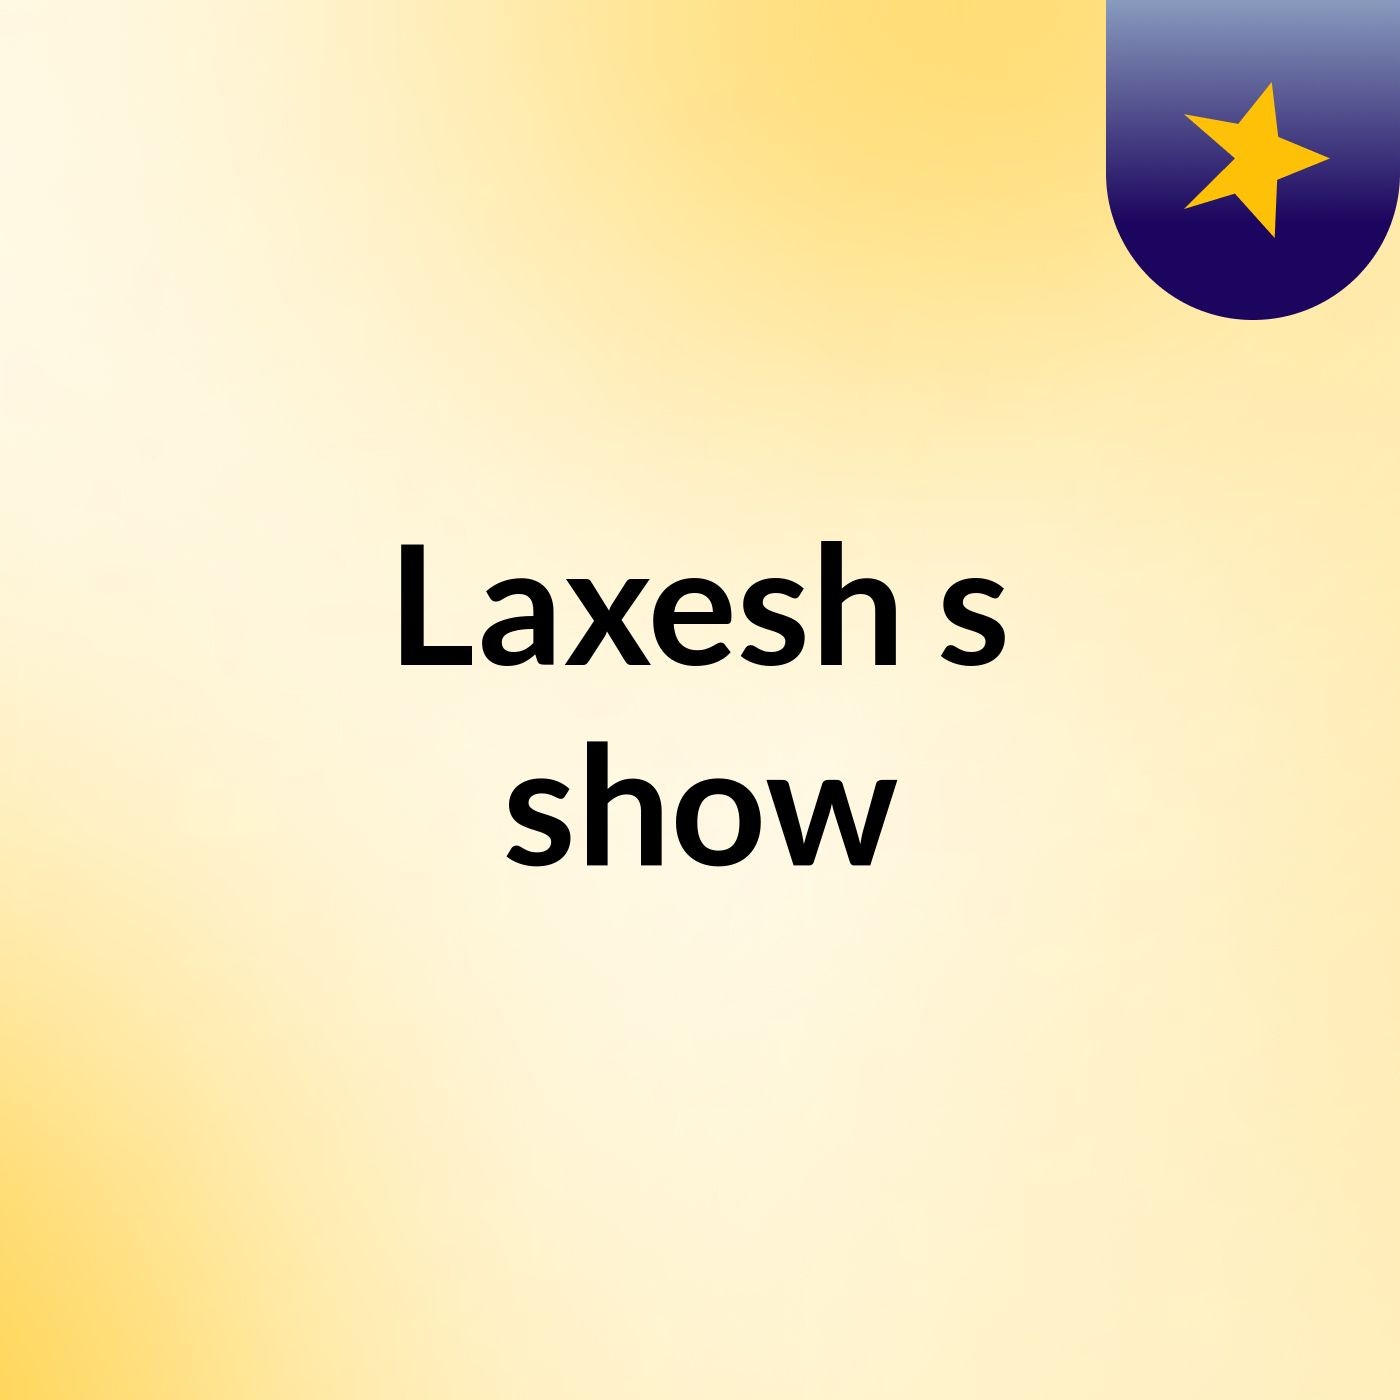 Laxesh's show